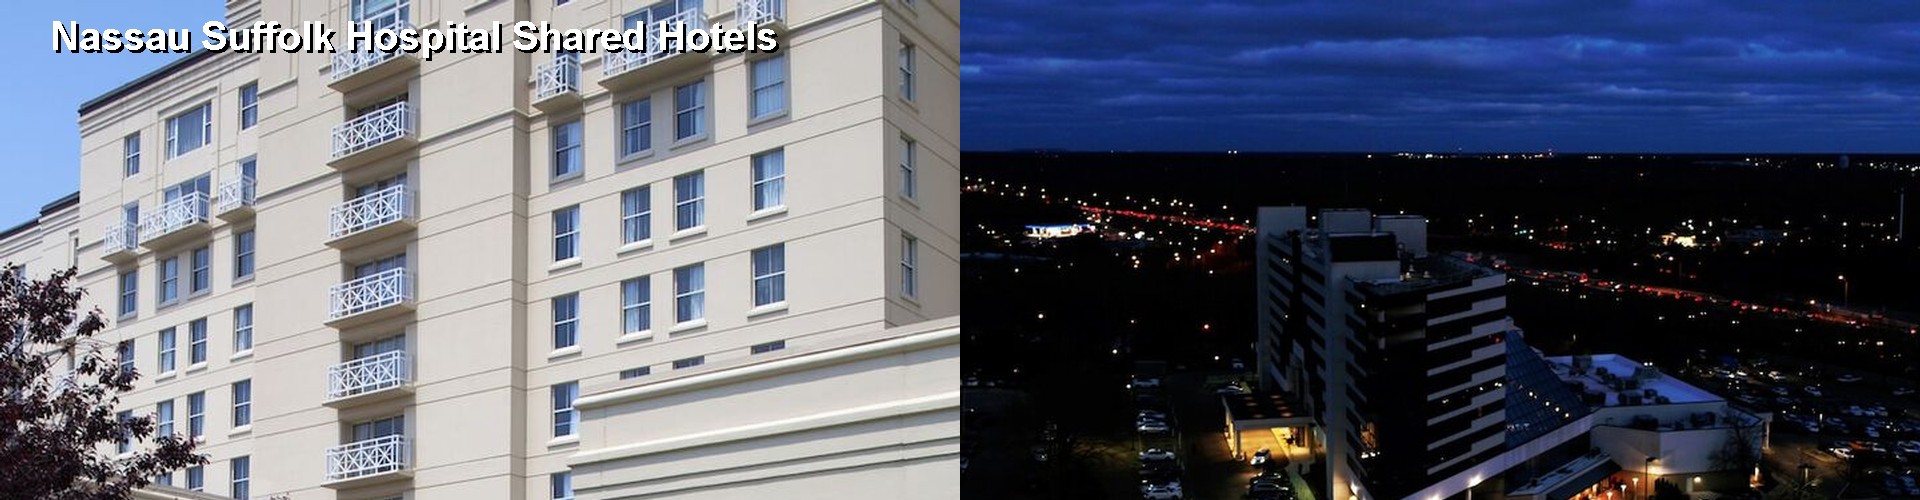 5 Best Hotels near Nassau Suffolk Hospital Shared